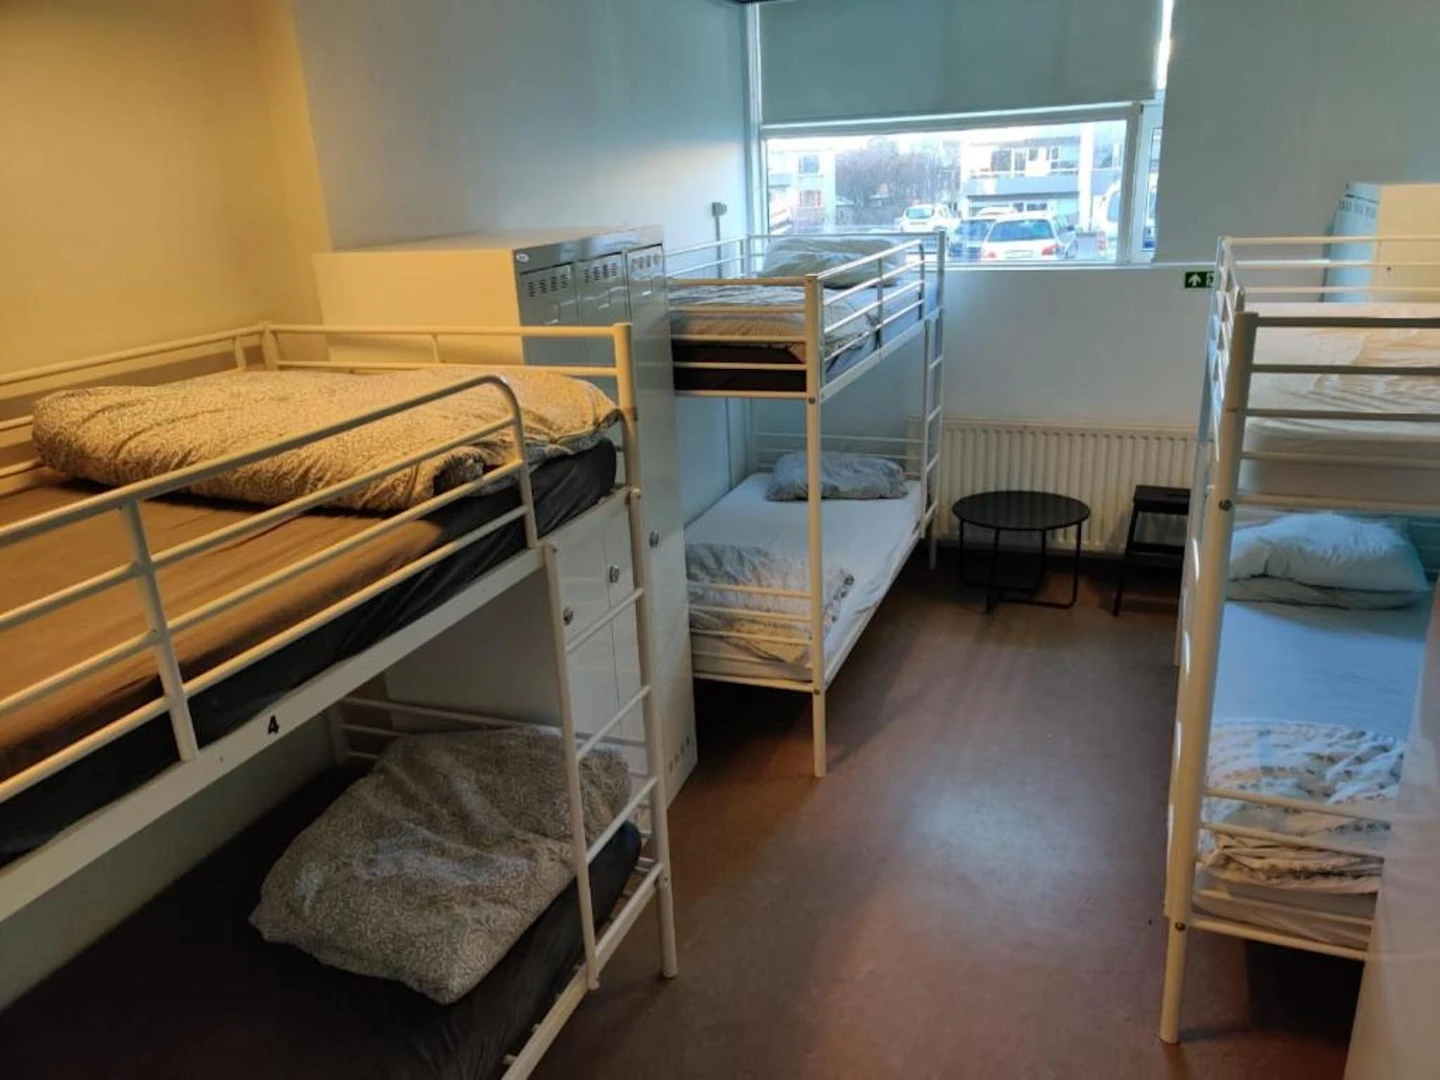 Shared room in 3-bedroom flat Reykjavík